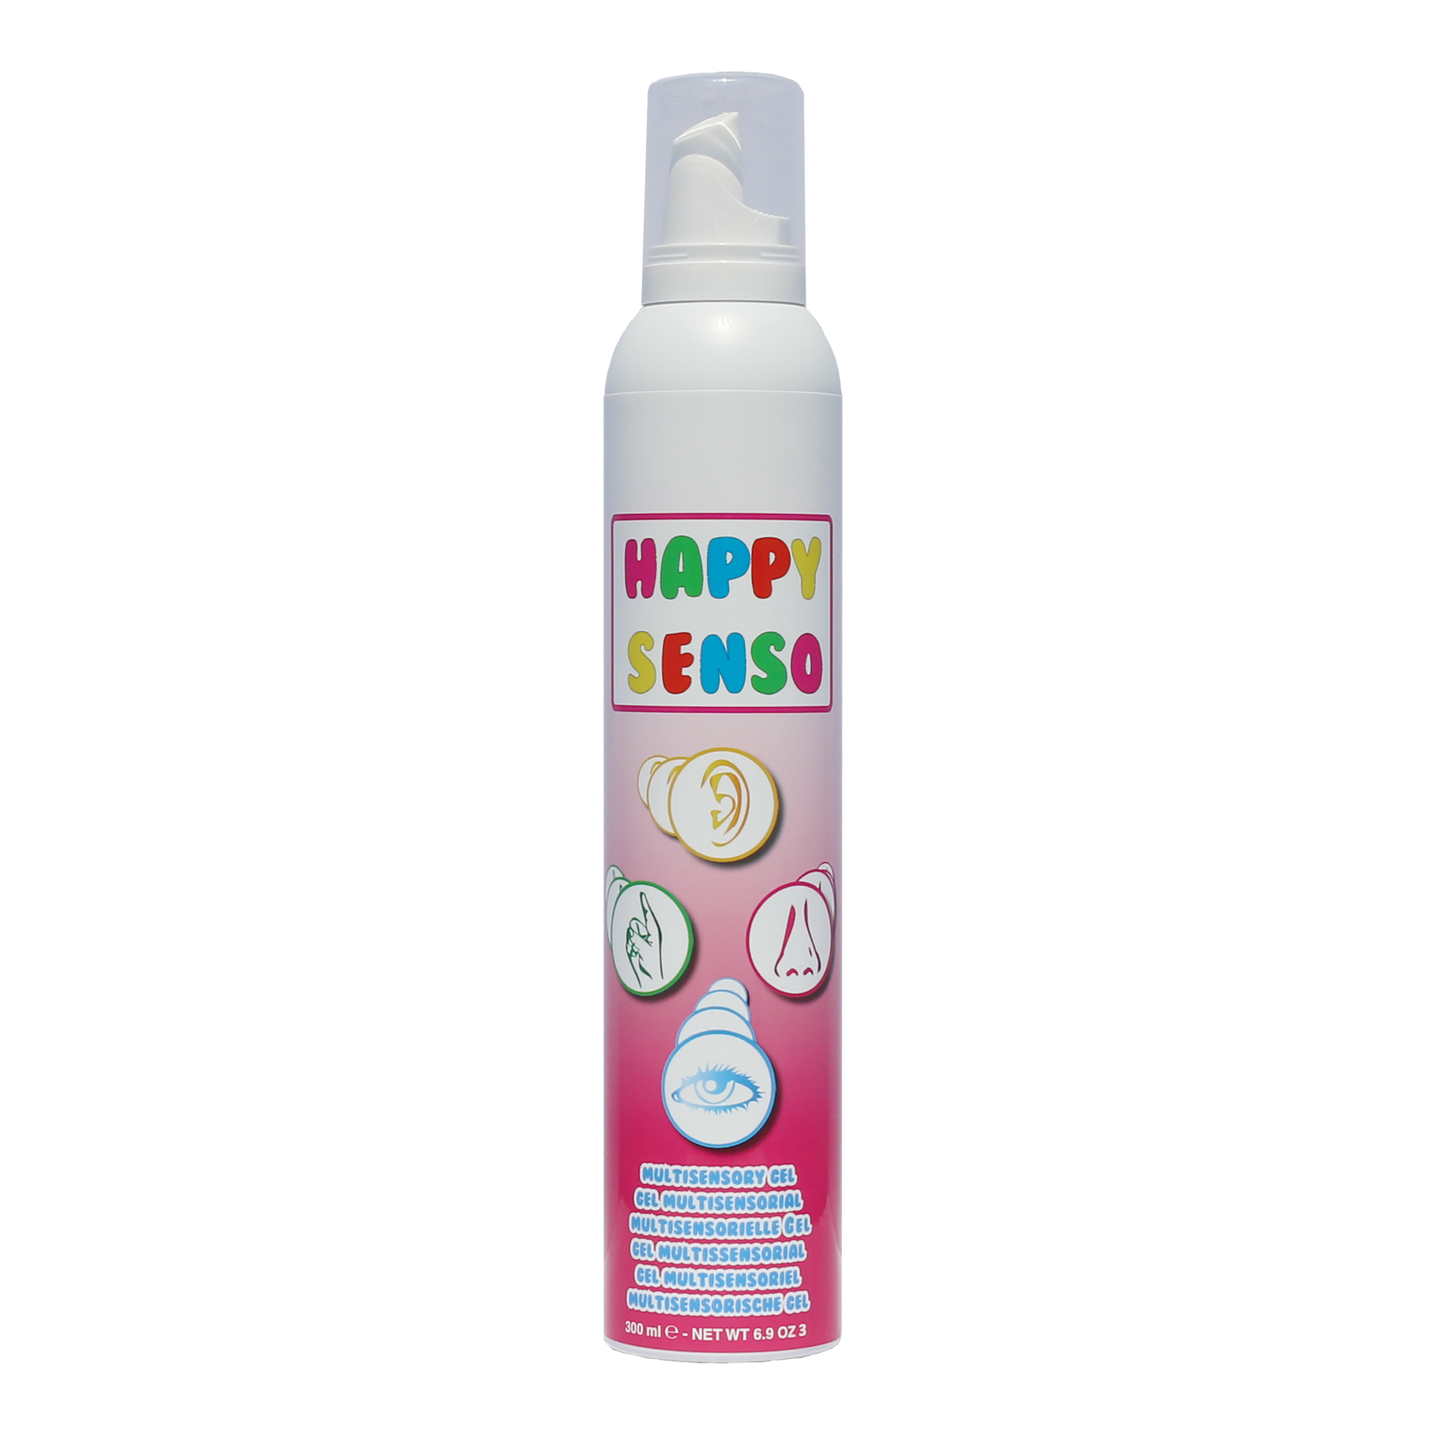 Happy Senso: Sweetness Multisensory Gel